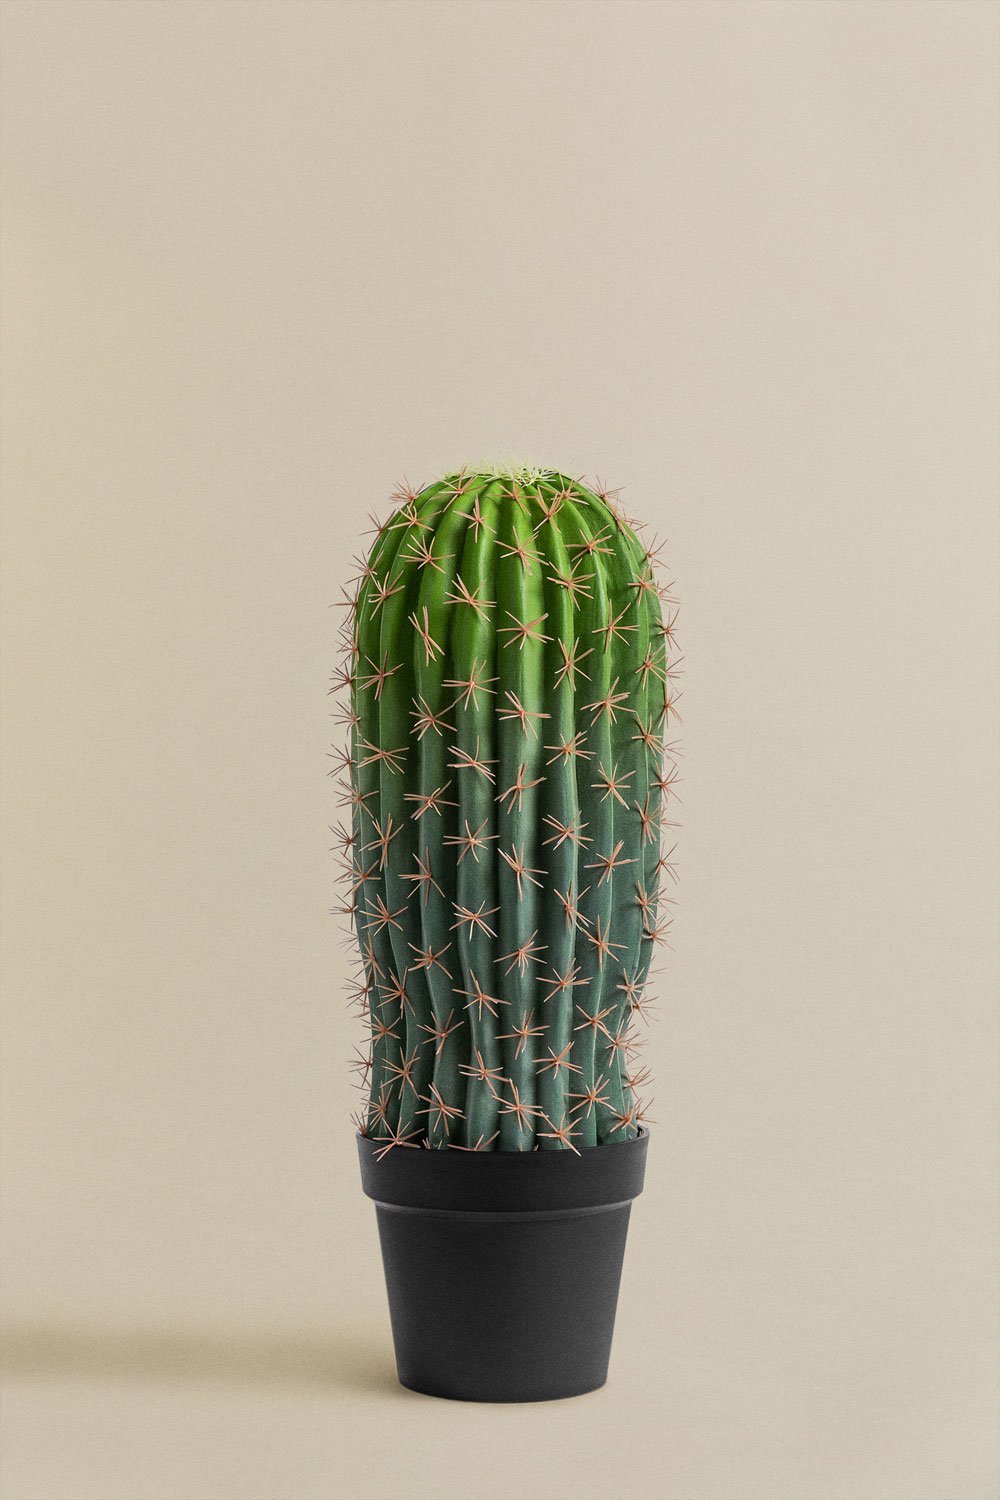 Cactus artificiel Echinopsis 60 cm, image de la galerie 1